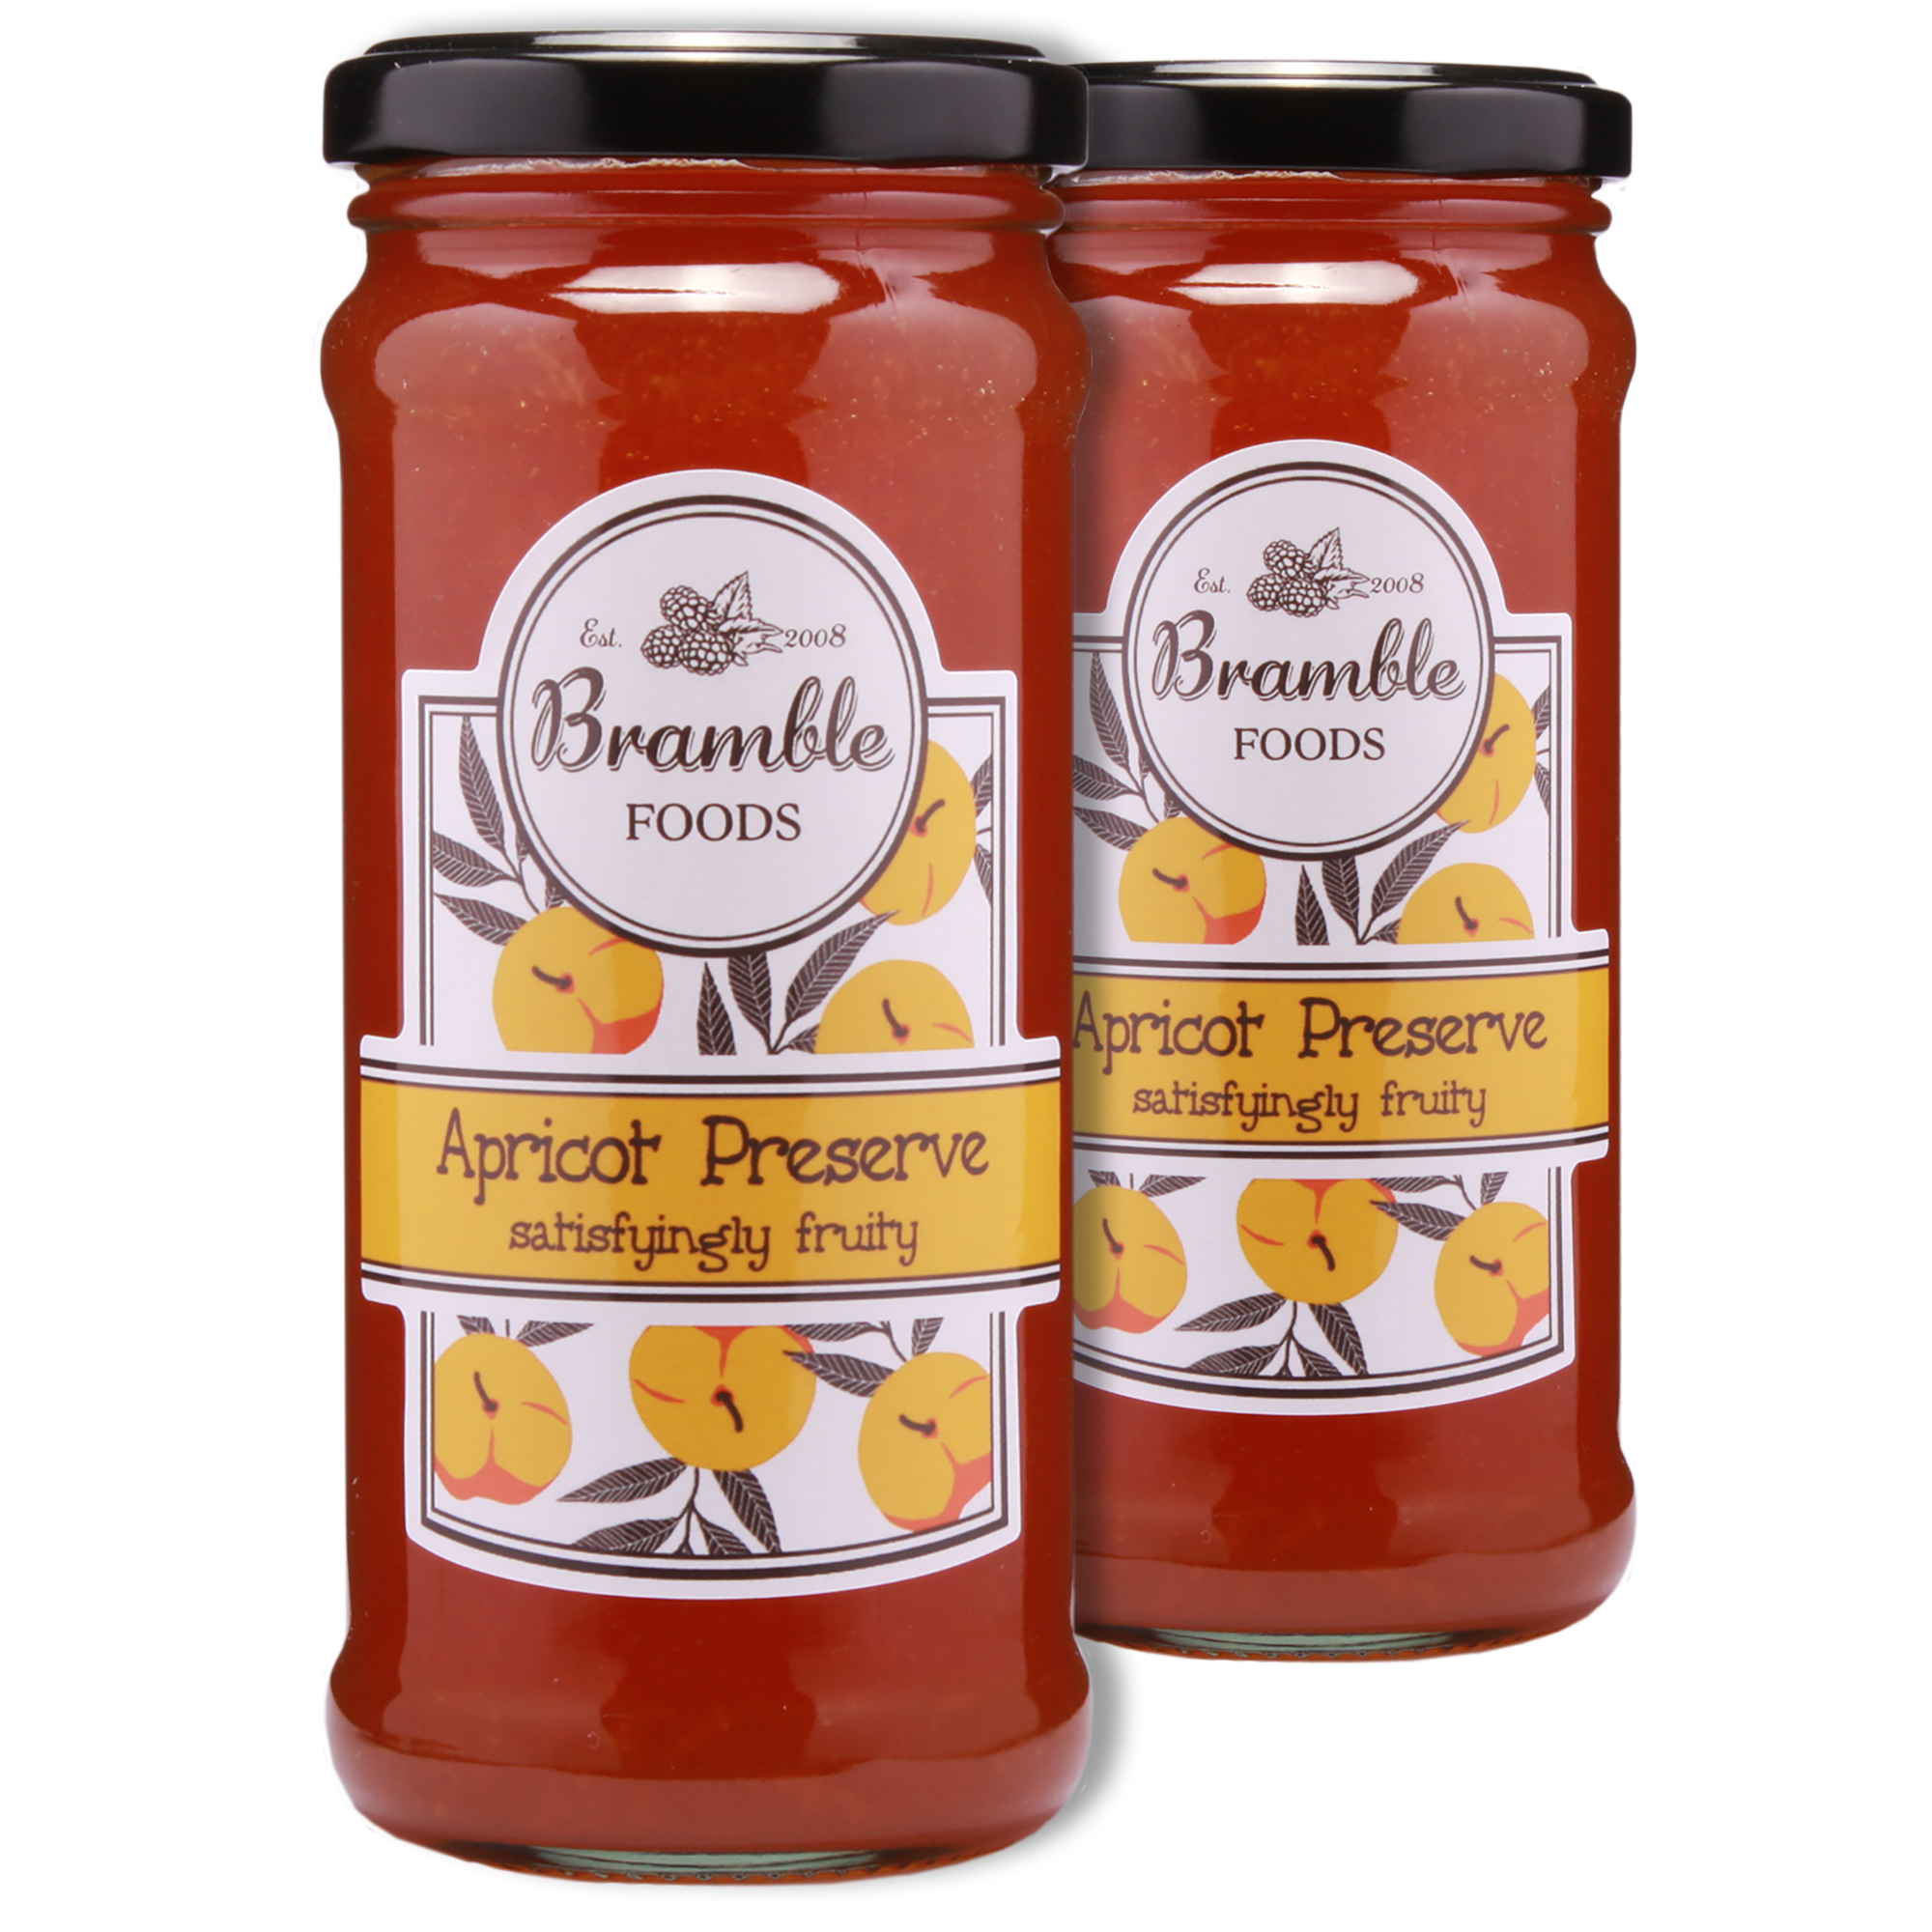 Twin Pack of Bramble Apricot Preserve 340g